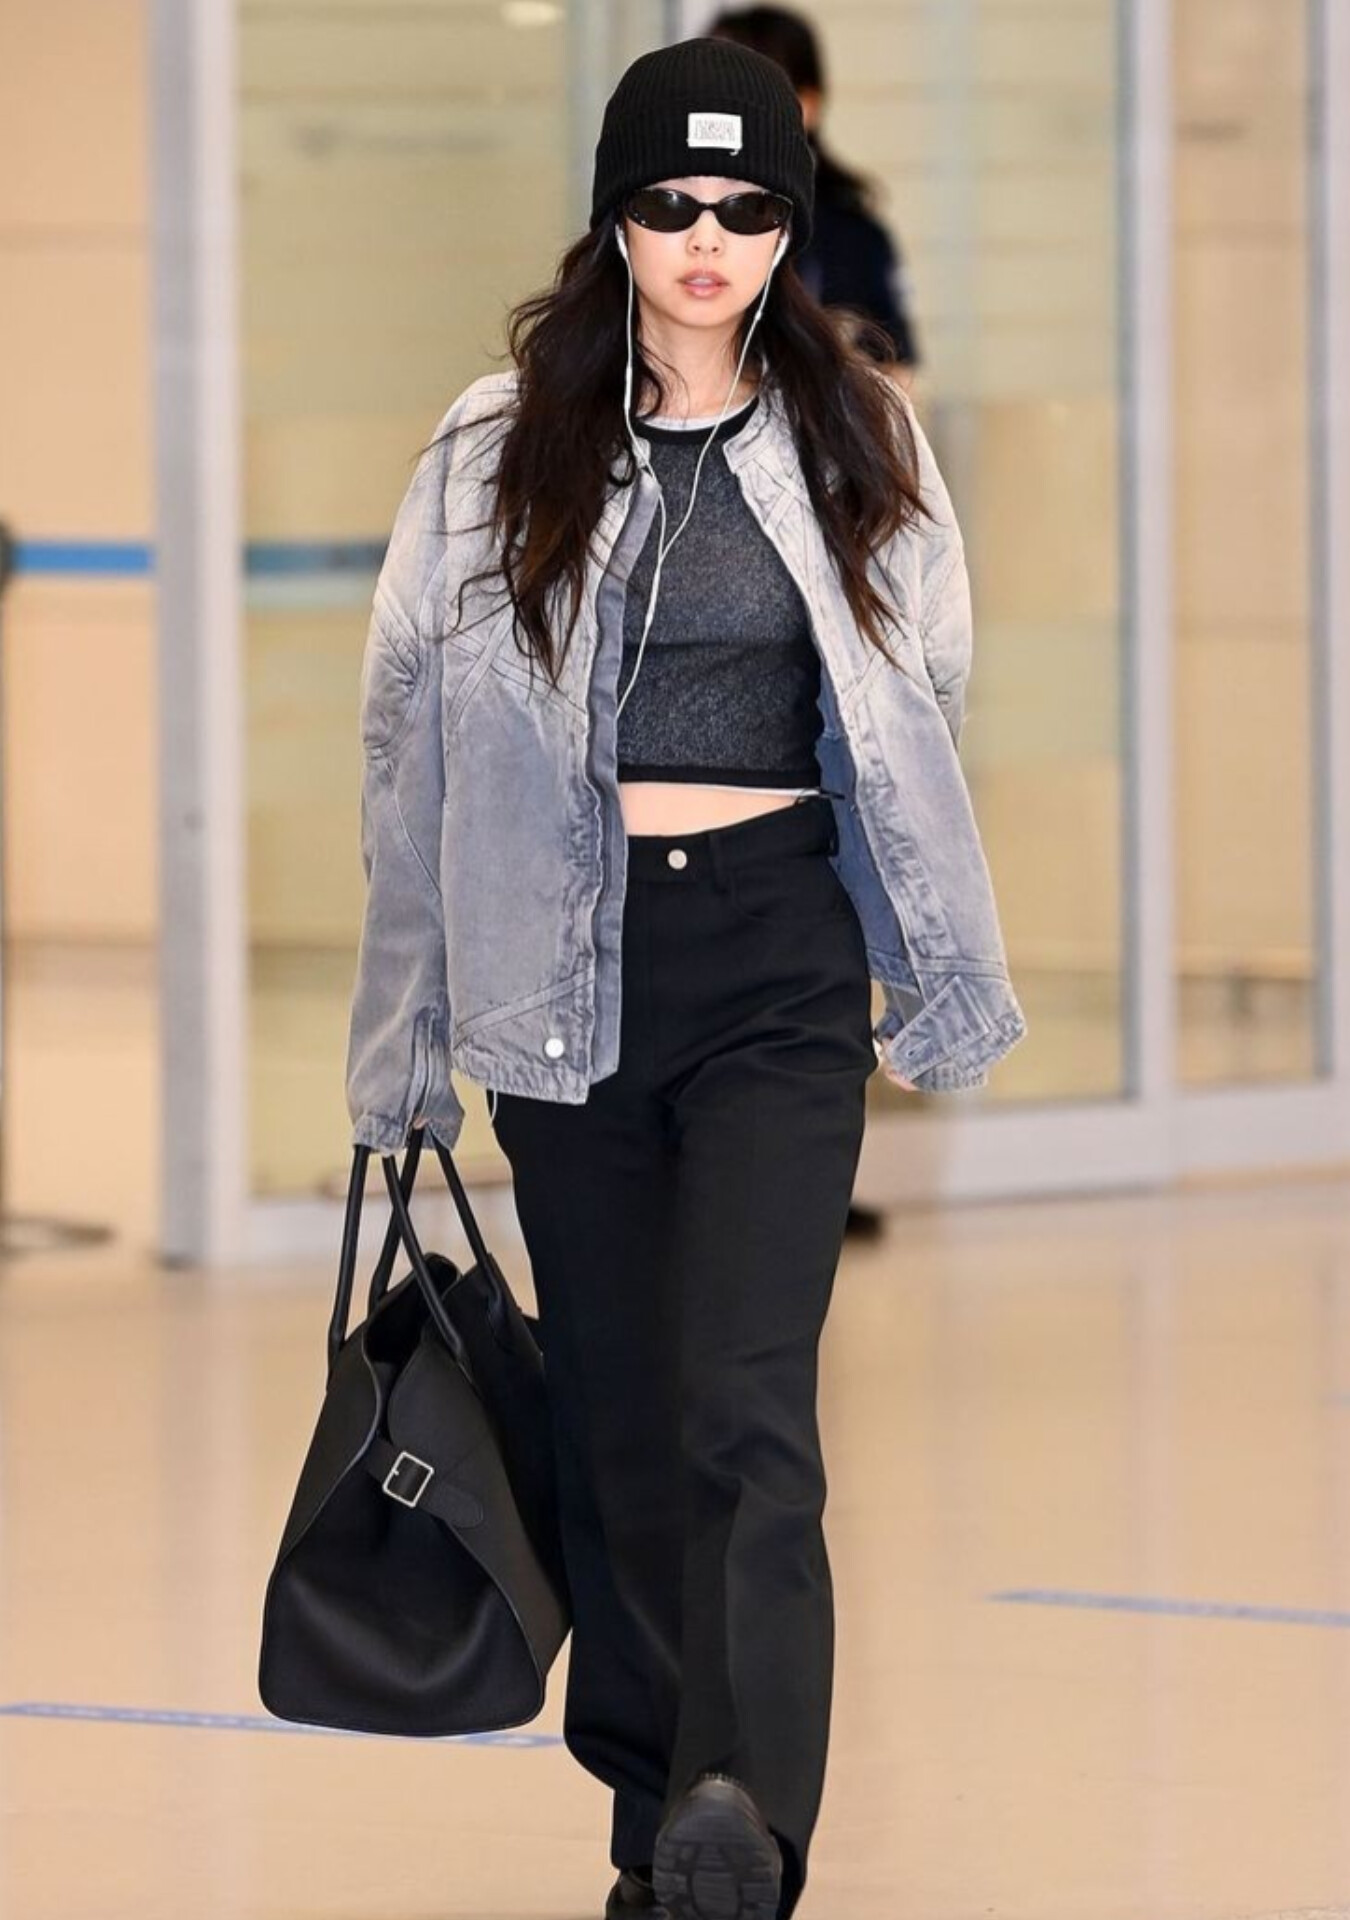  Motor Jacket Jennie Kim airport fashion